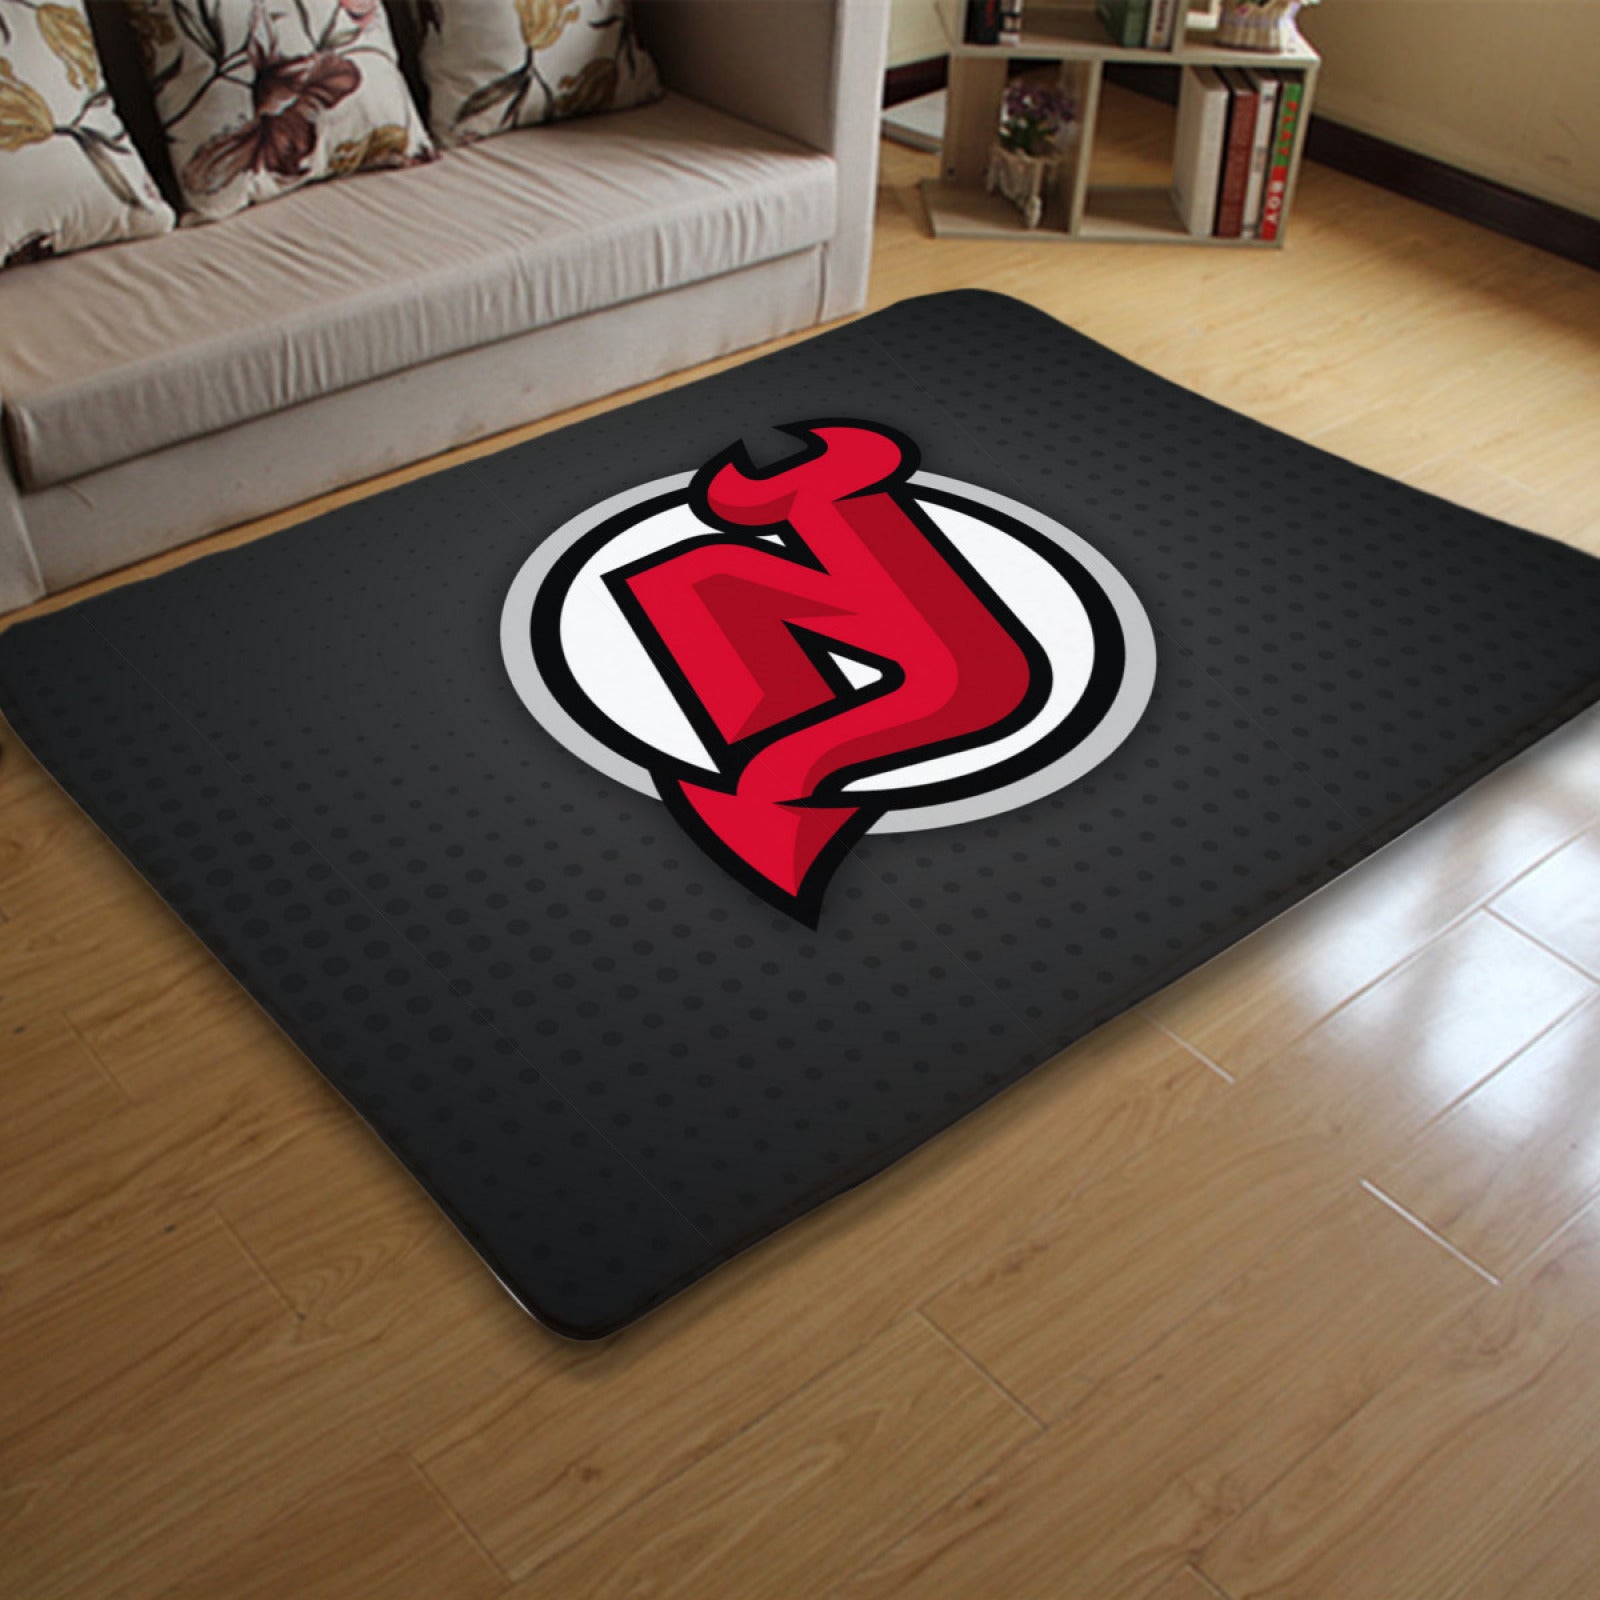 New Jersey Devils Hockey League Carpet Living Room Bedroom Mats Kitchen Bathroom Rugs